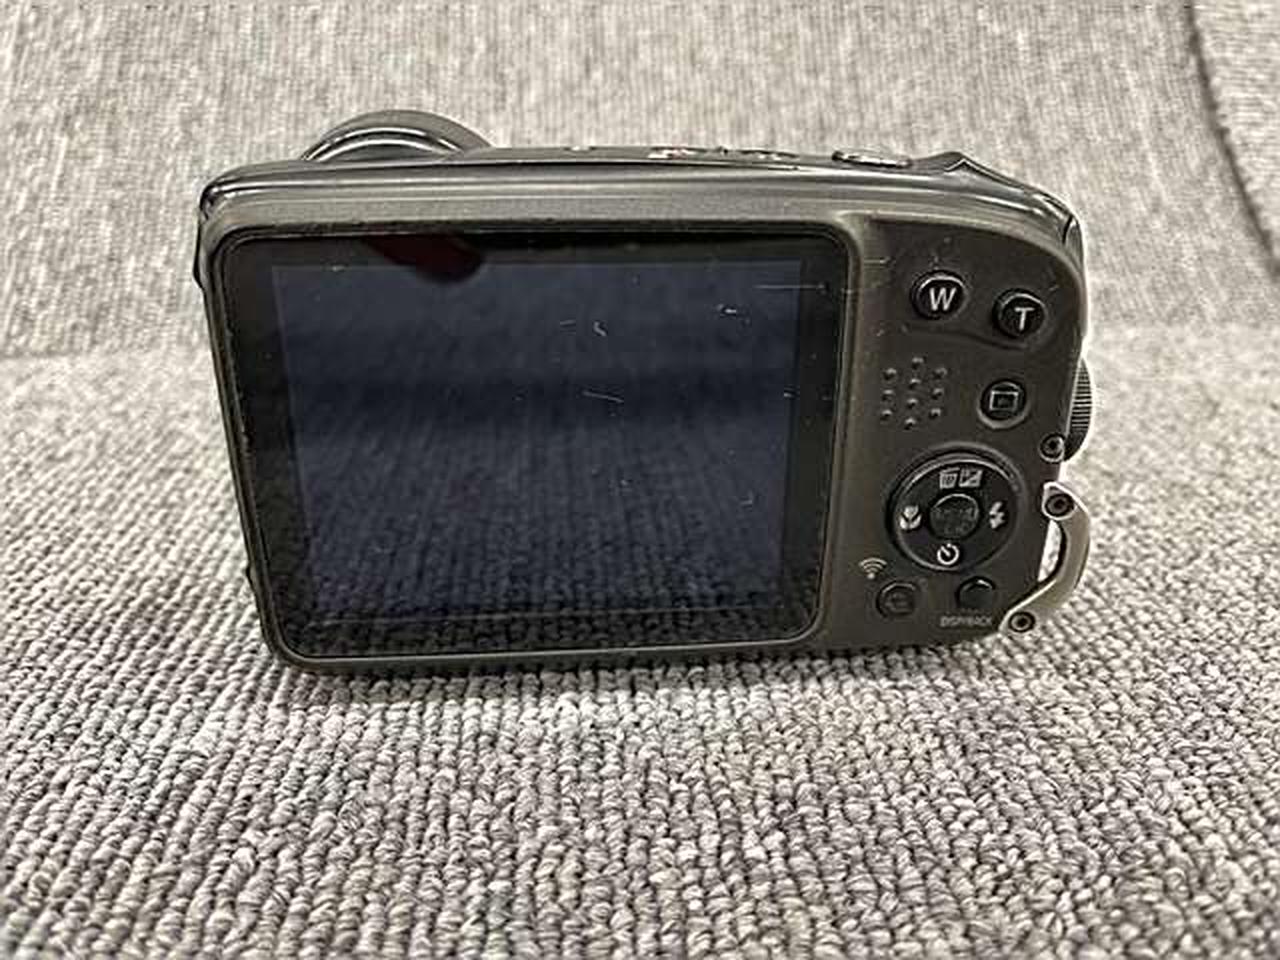 FUJIFILM Digital Camera Model number: FINEPIX XP90 Used in Japan